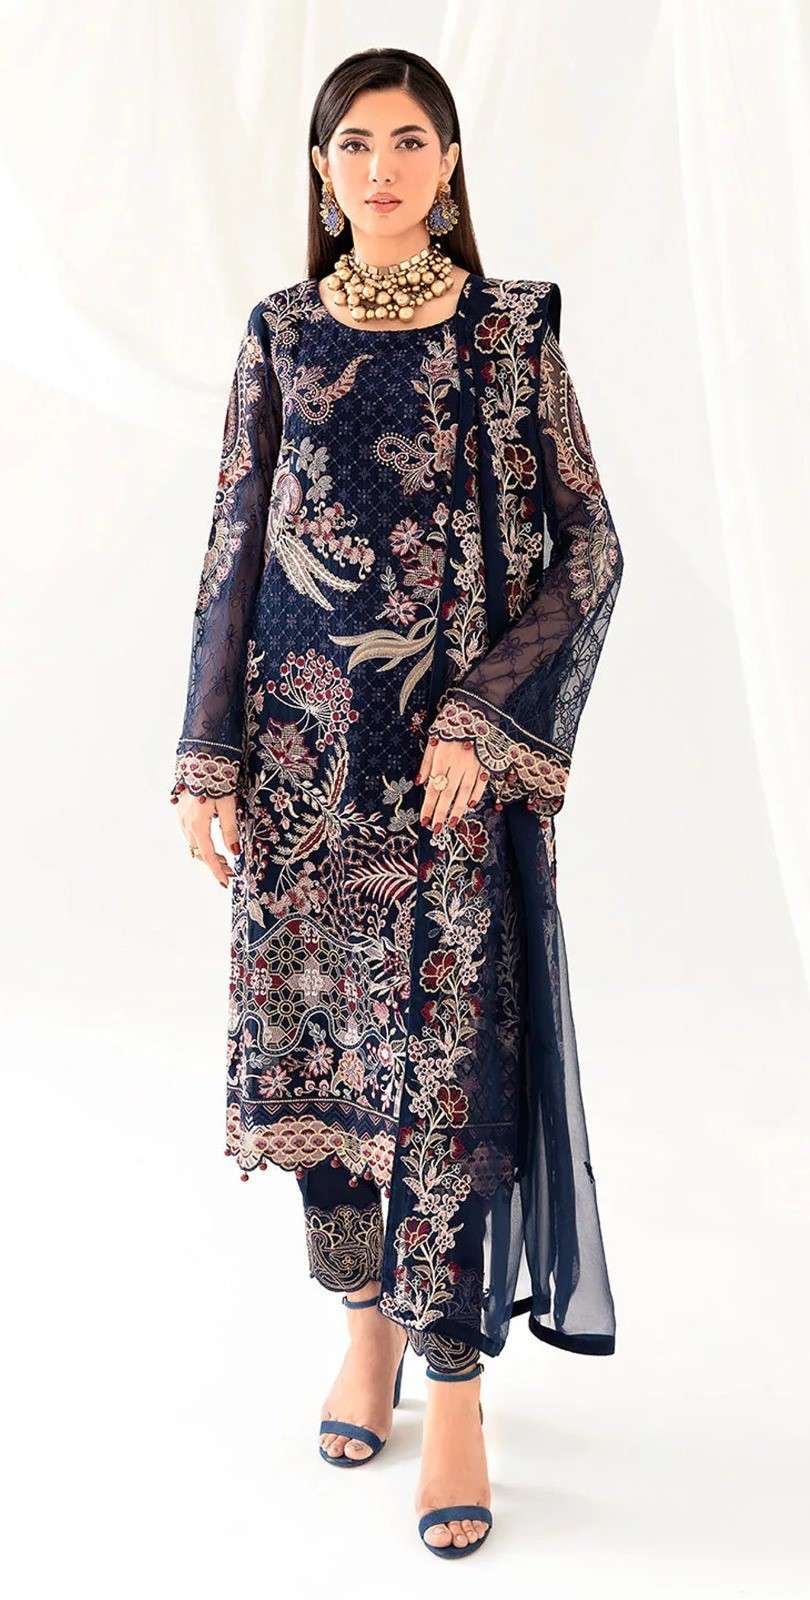 mushq 263-268 colours exclusive designer pakistani salwar kameez online supplier surat gujarat